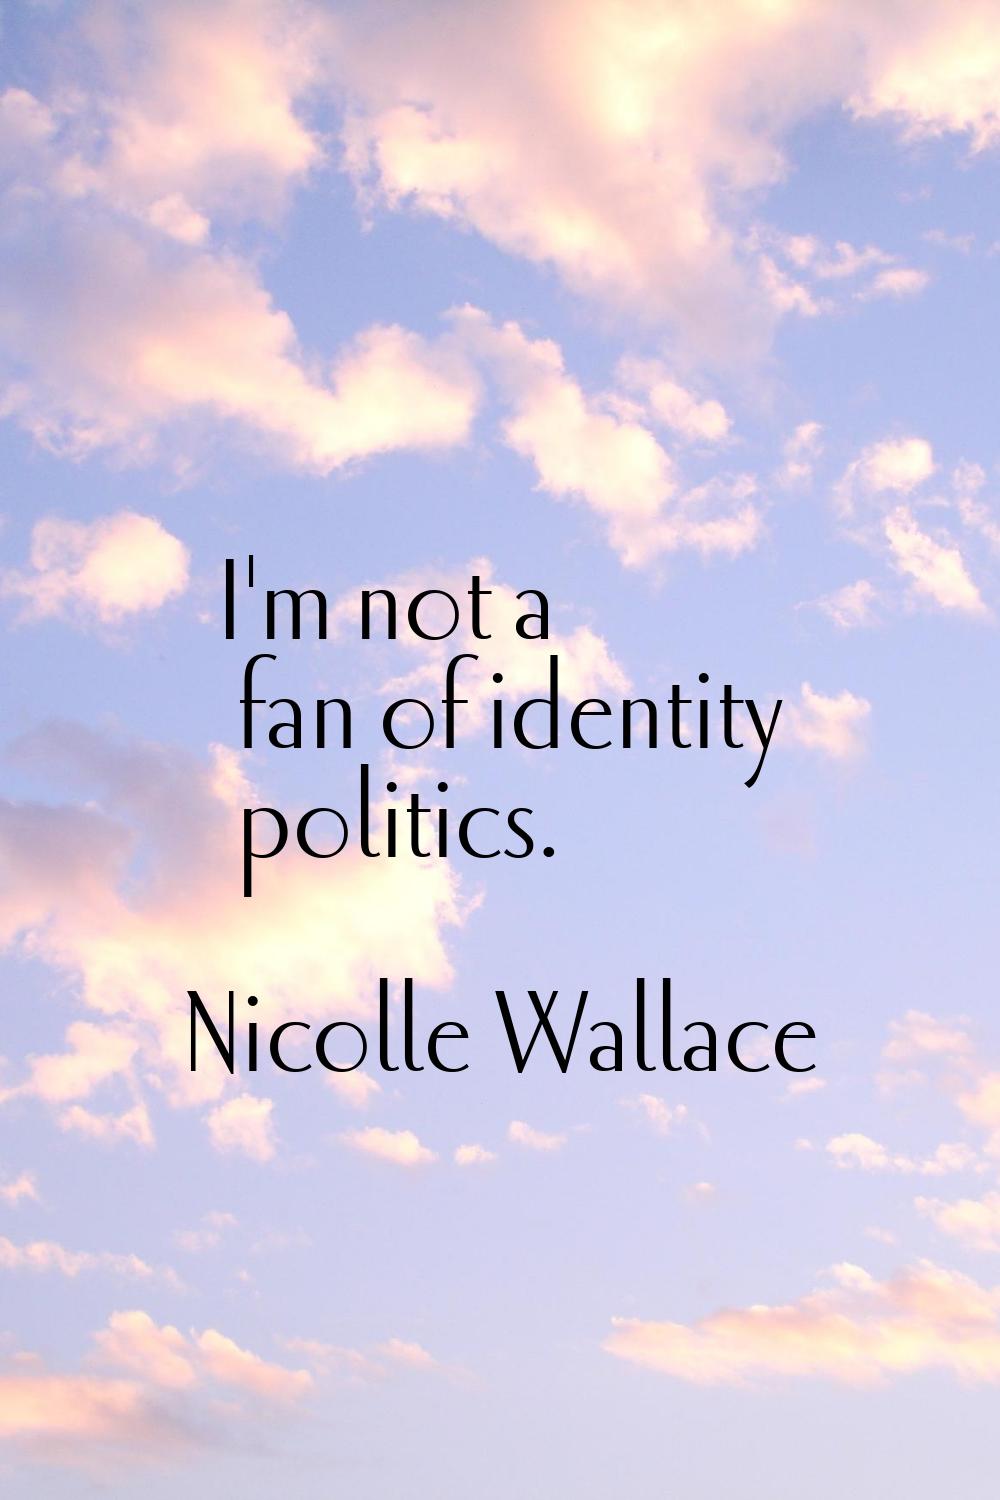 I'm not a fan of identity politics.